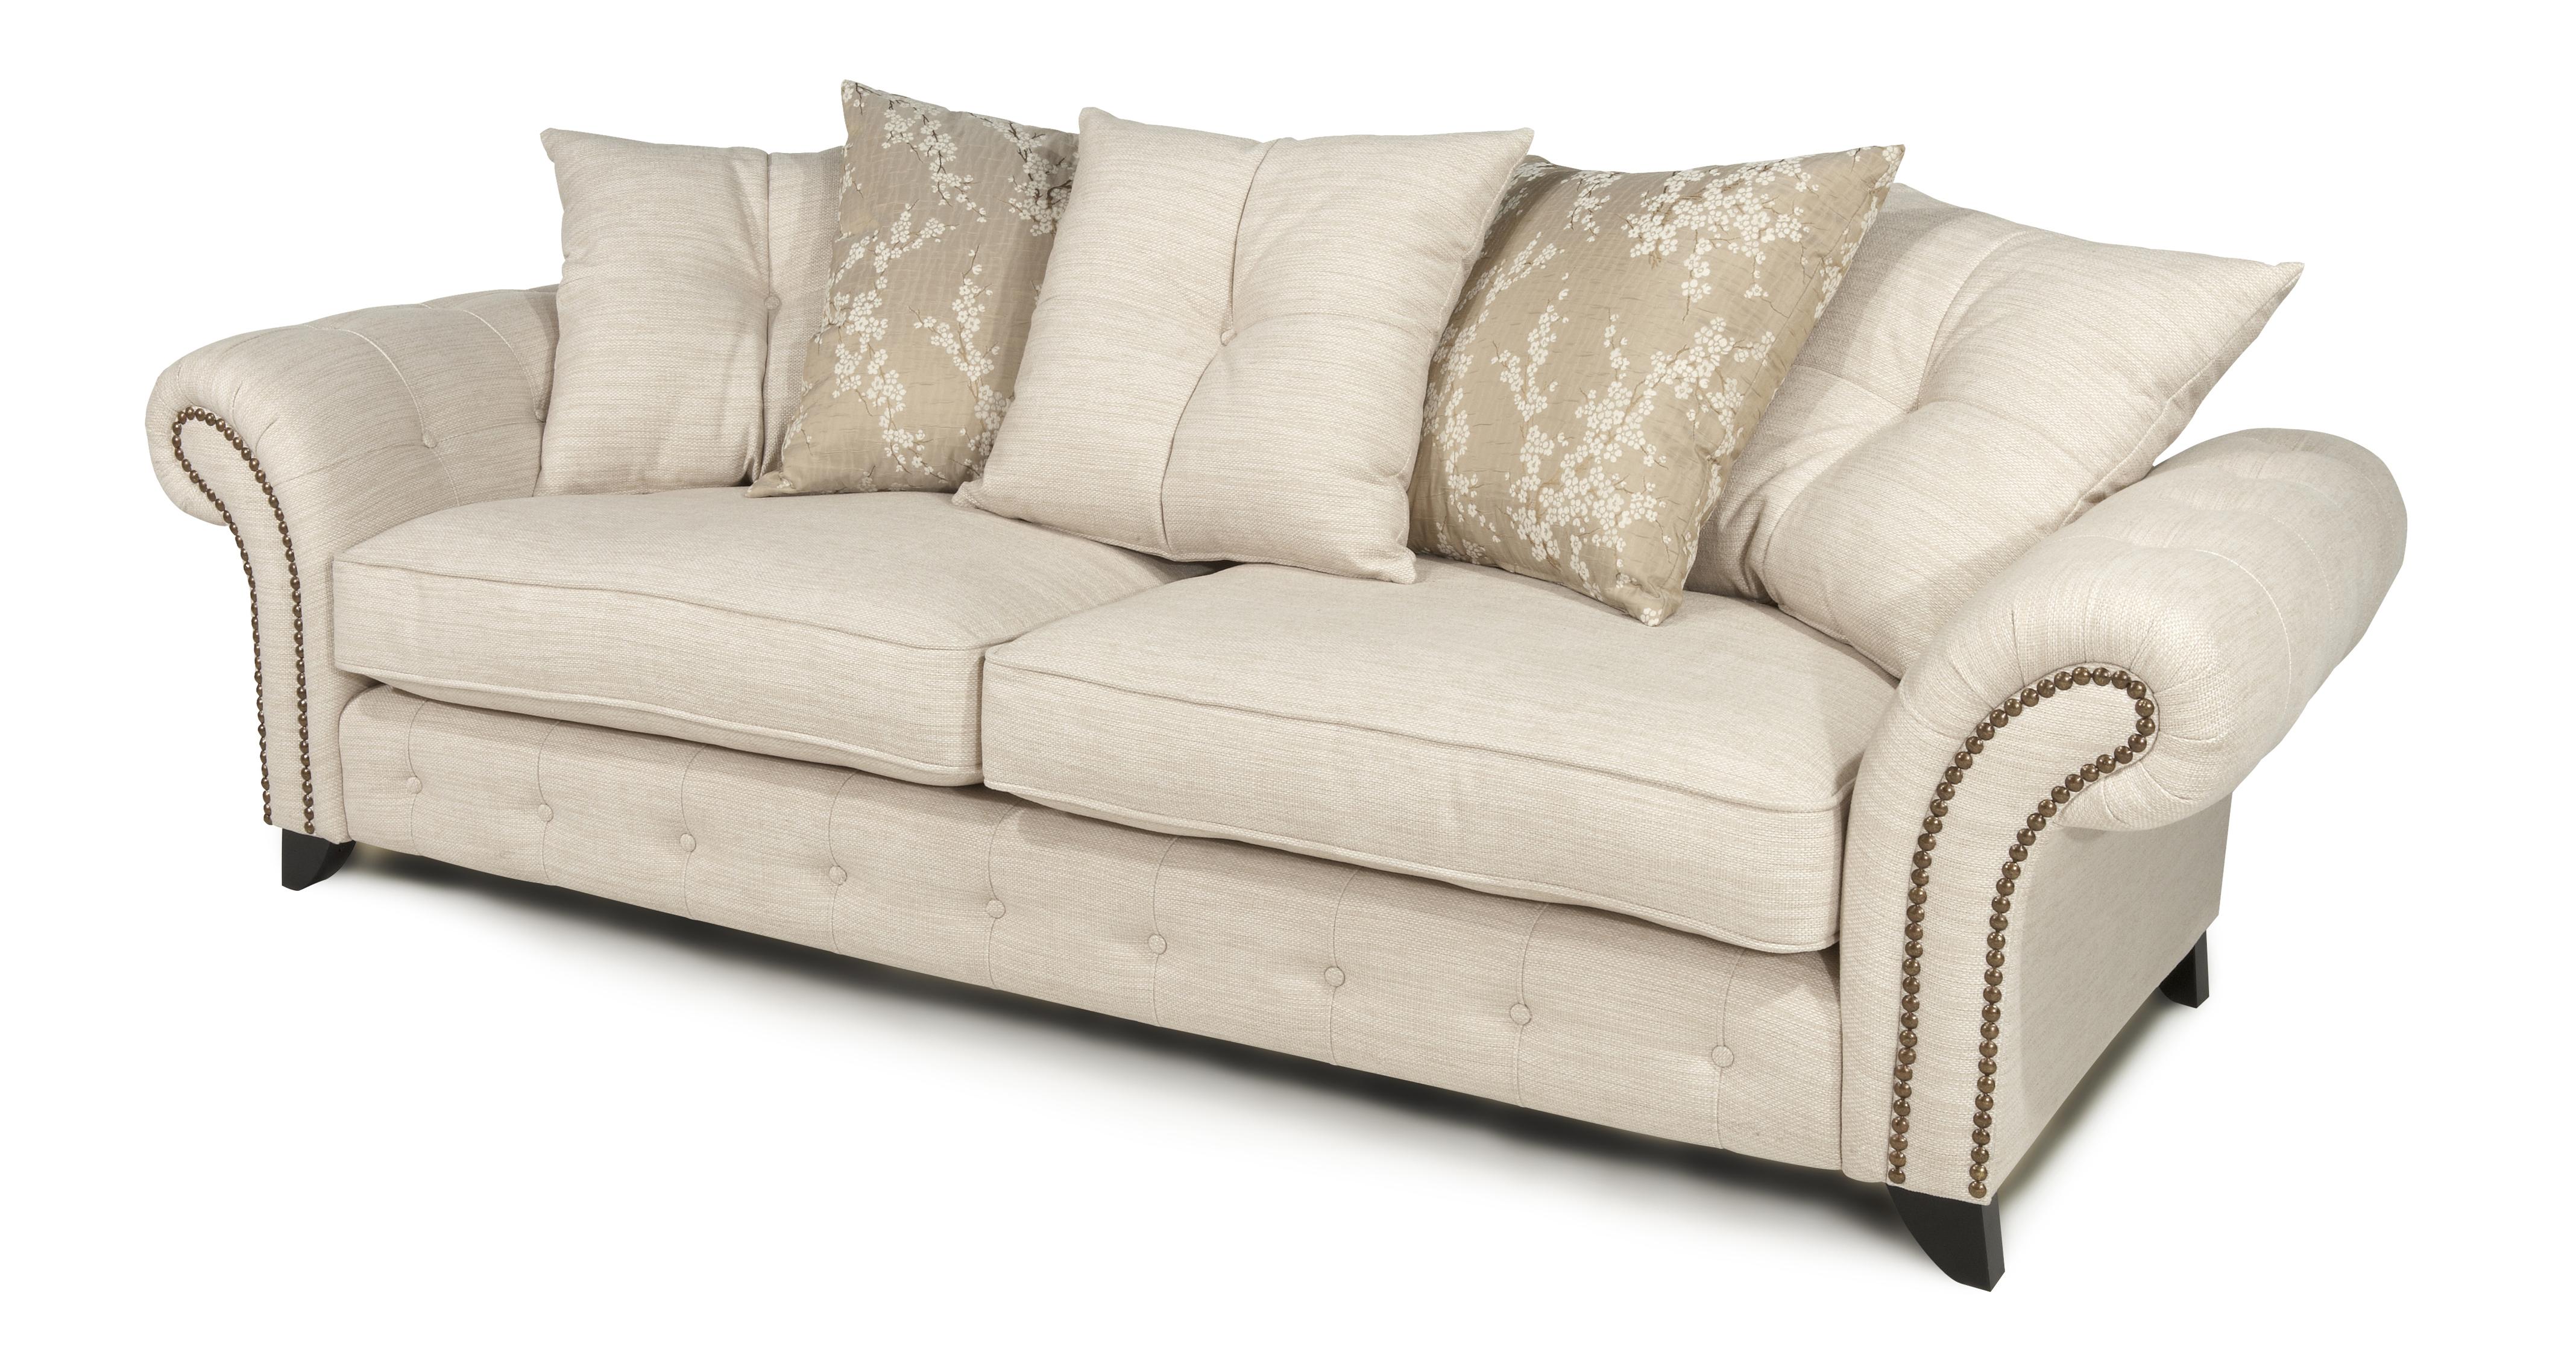 DFS Akasha Cream Fabric Sofa Set Inc 4 Seater Sofa and 2 Seater Cuddler